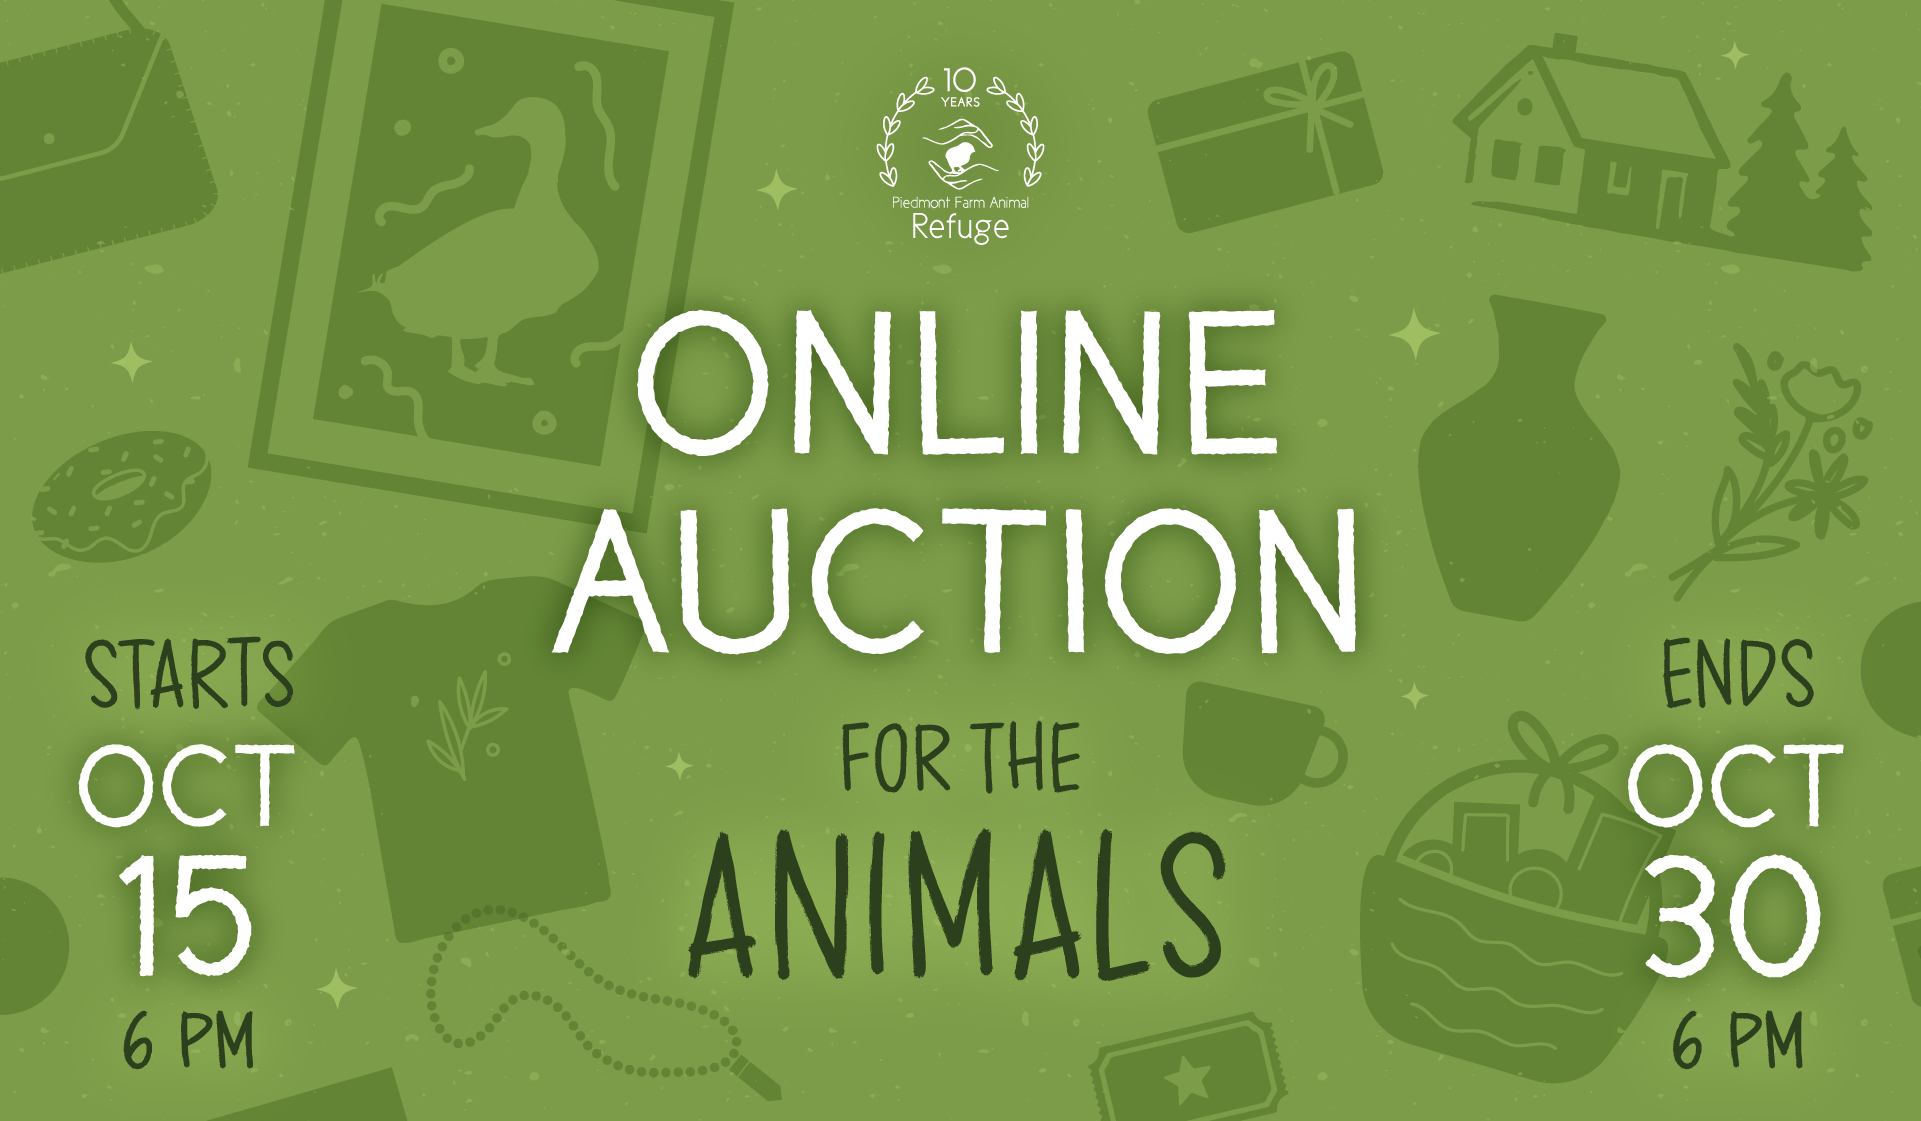 Online Auction for the Animals — Piedmont Farm Animal Refuge